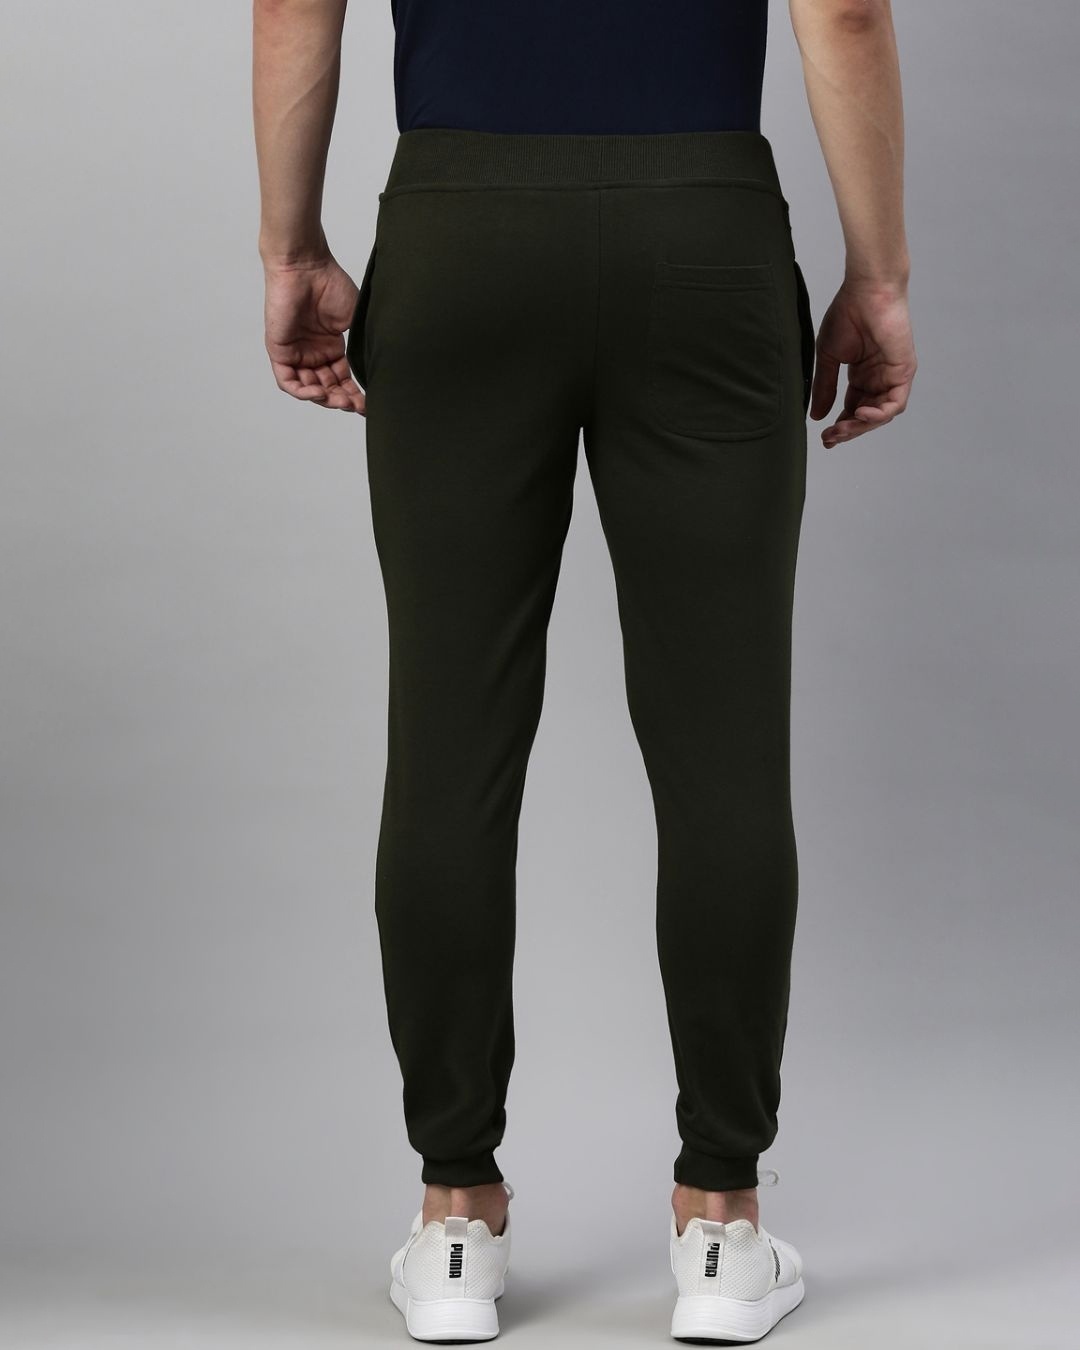 Buy Men's Olive Embroidered Slim Fit Joggers for Men Green Online at ...